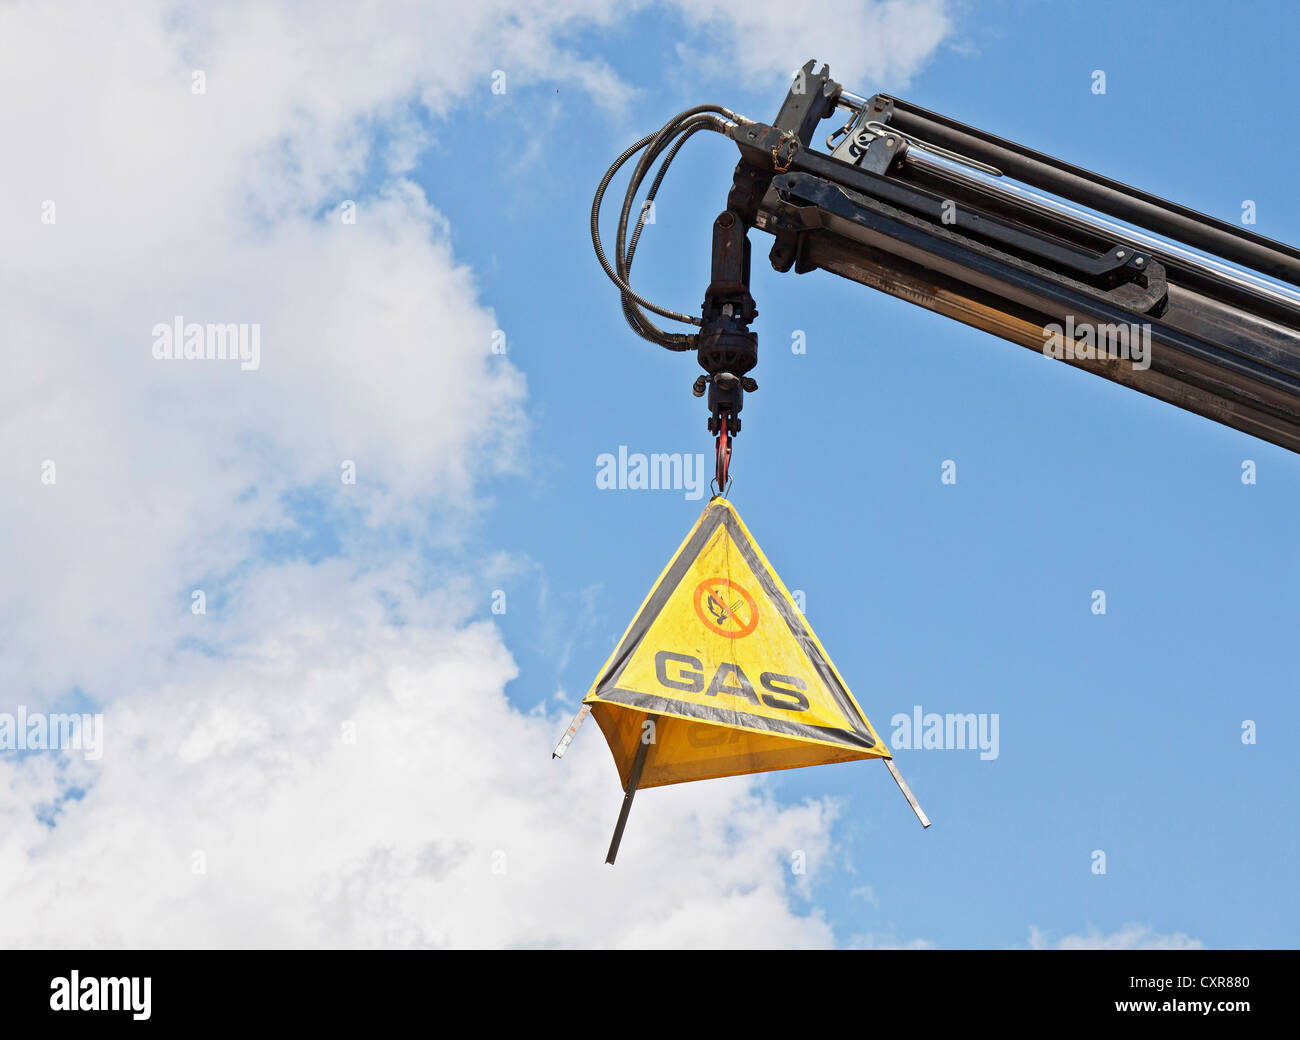 Gas warning, warning triangle, crane, Berlin Fire Department, Berlin, Germany, Europe Stock Photo